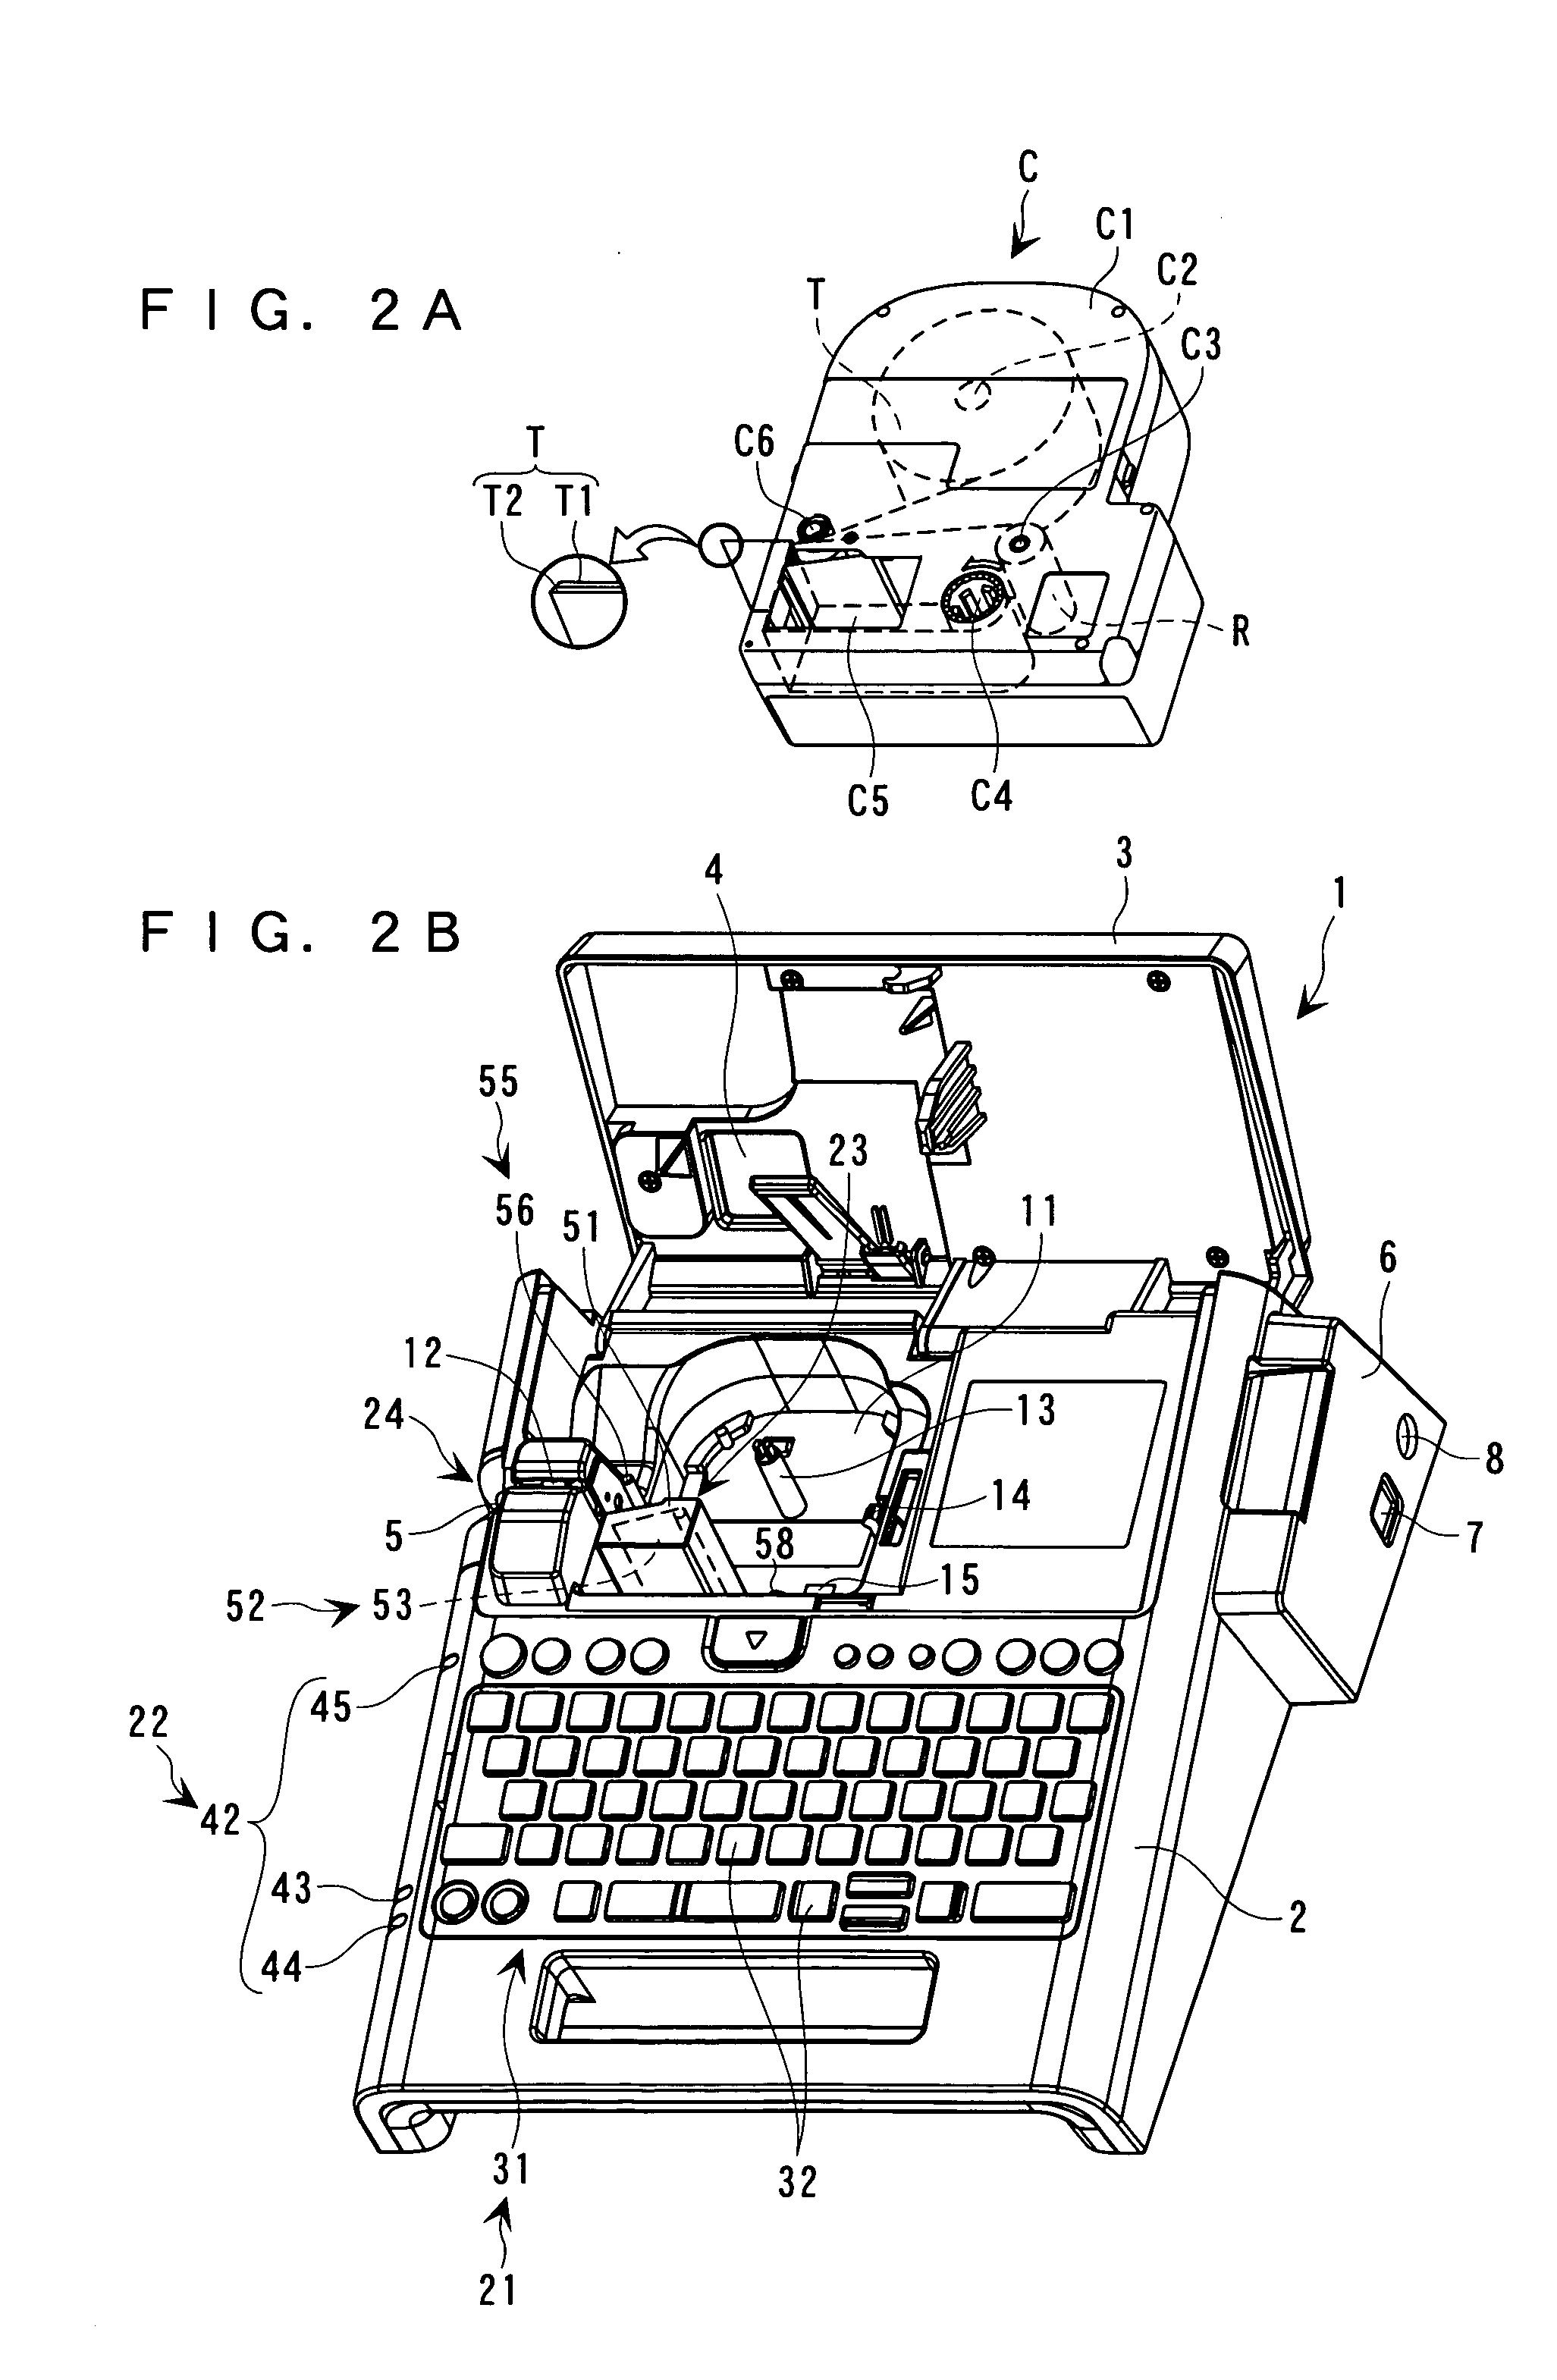 Cutter unit, half-cutting mechanism, and tape printer